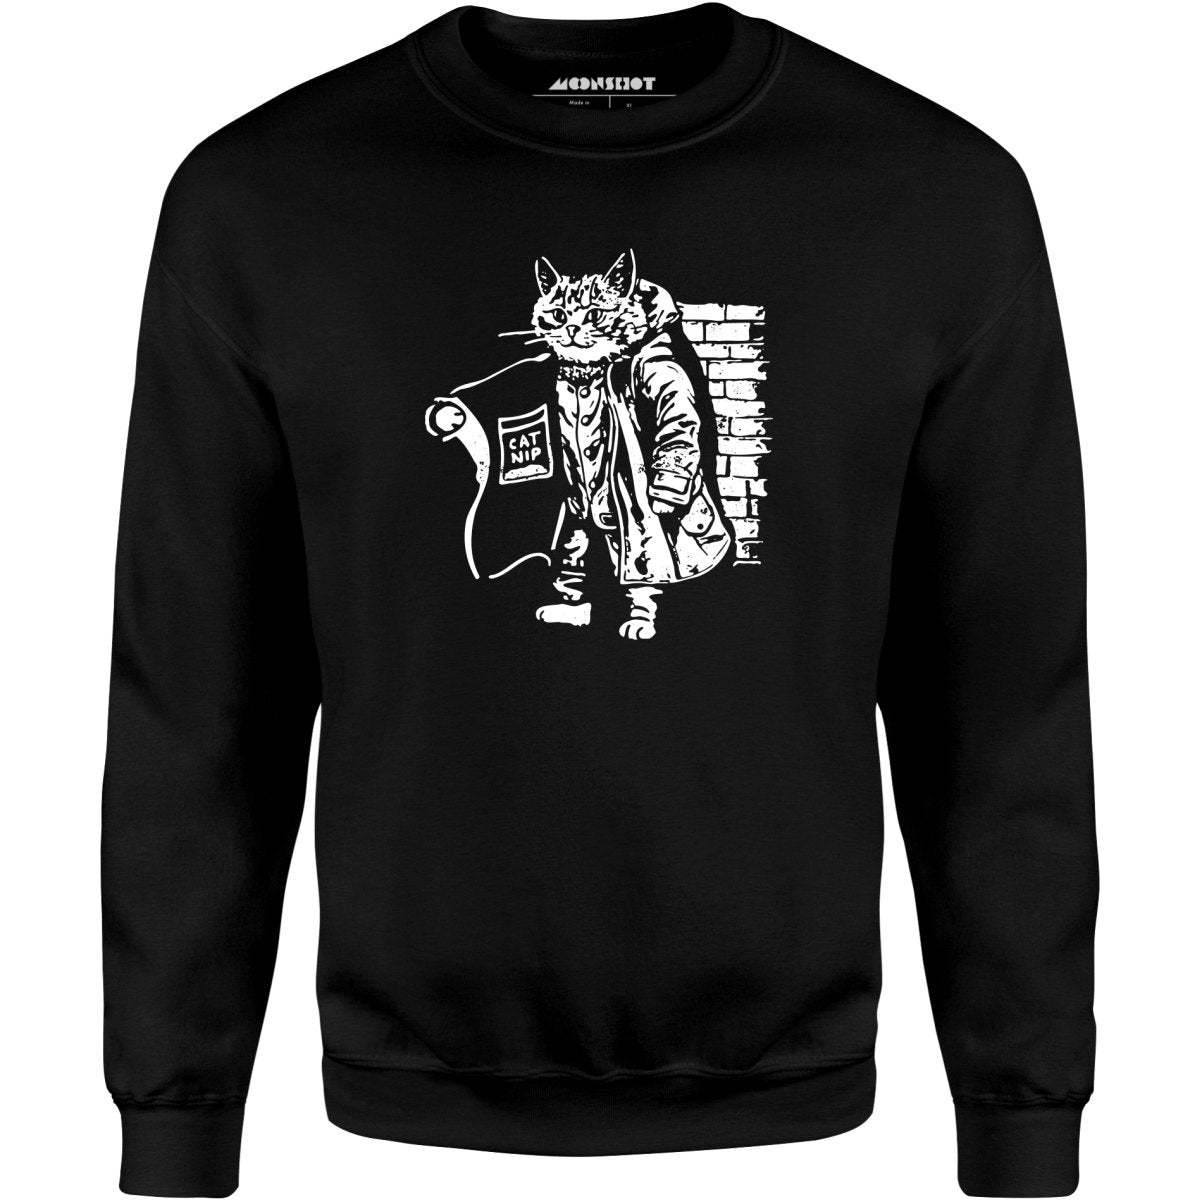 Catnip Dealer - Unisex Sweatshirt